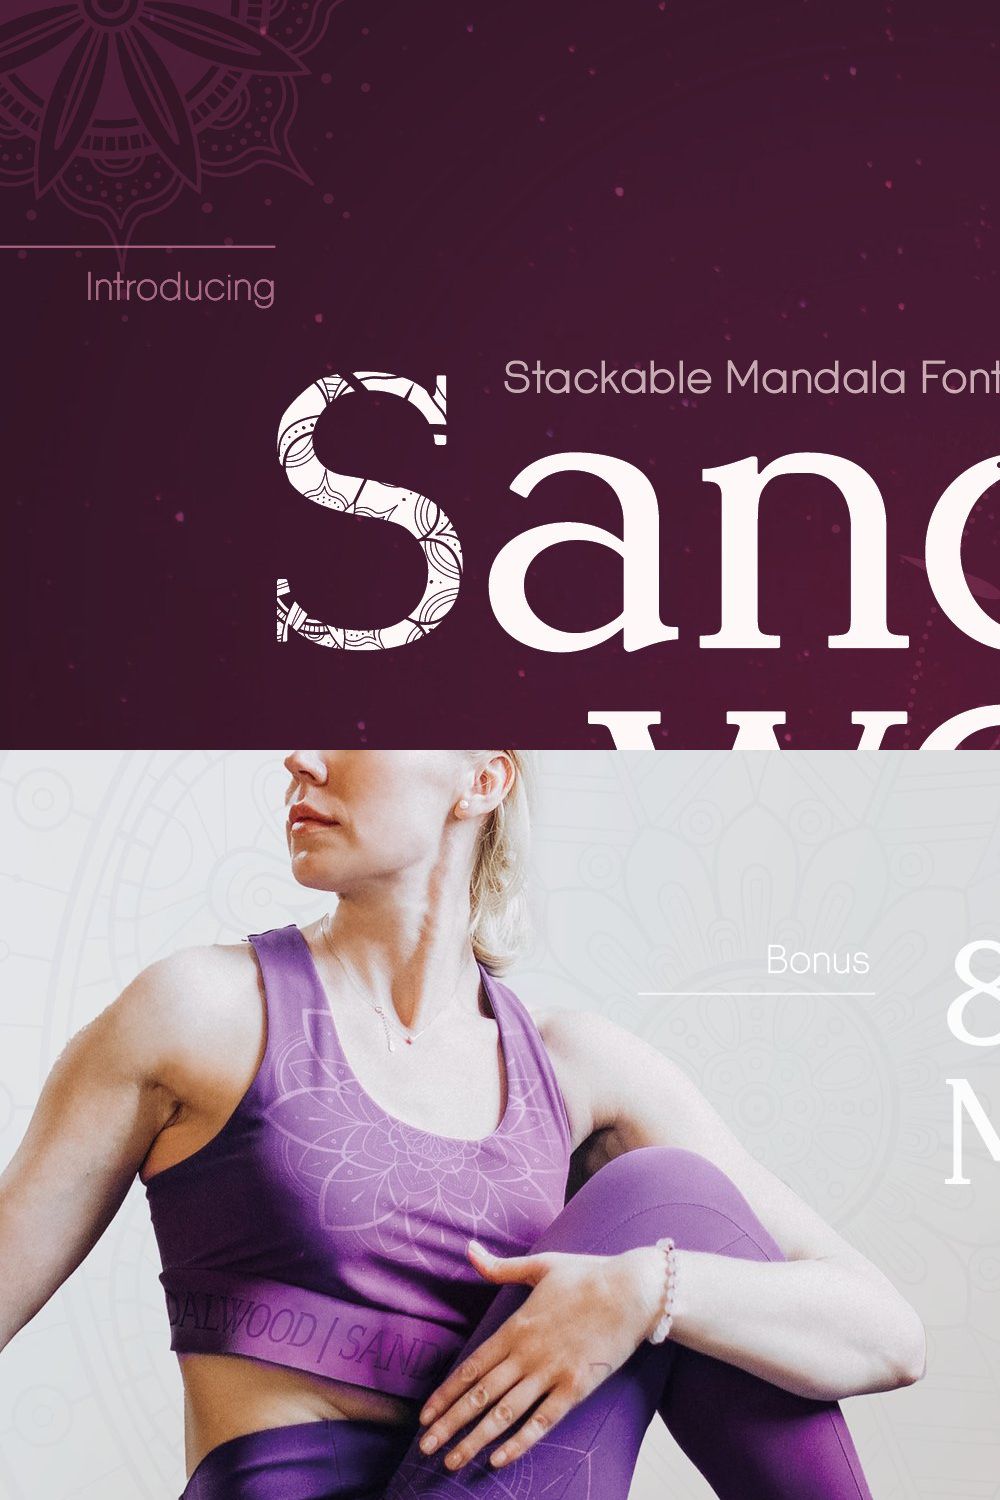 Sandalwood Stackable Mandala Fonts pinterest preview image.